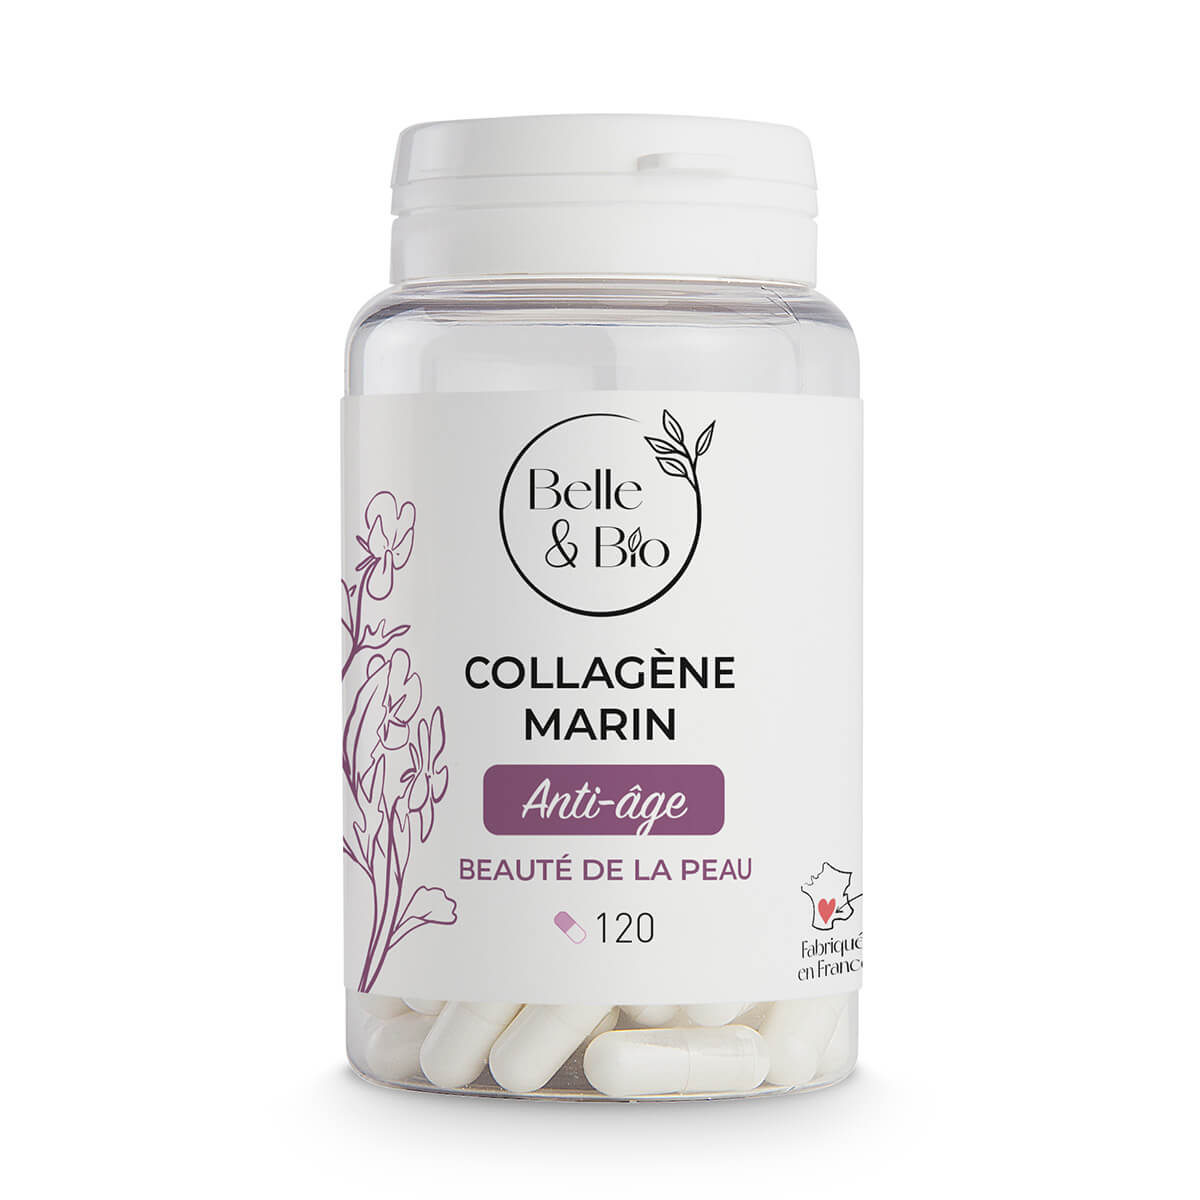 Collagène Marin (120 Gélules) - Anti-âge